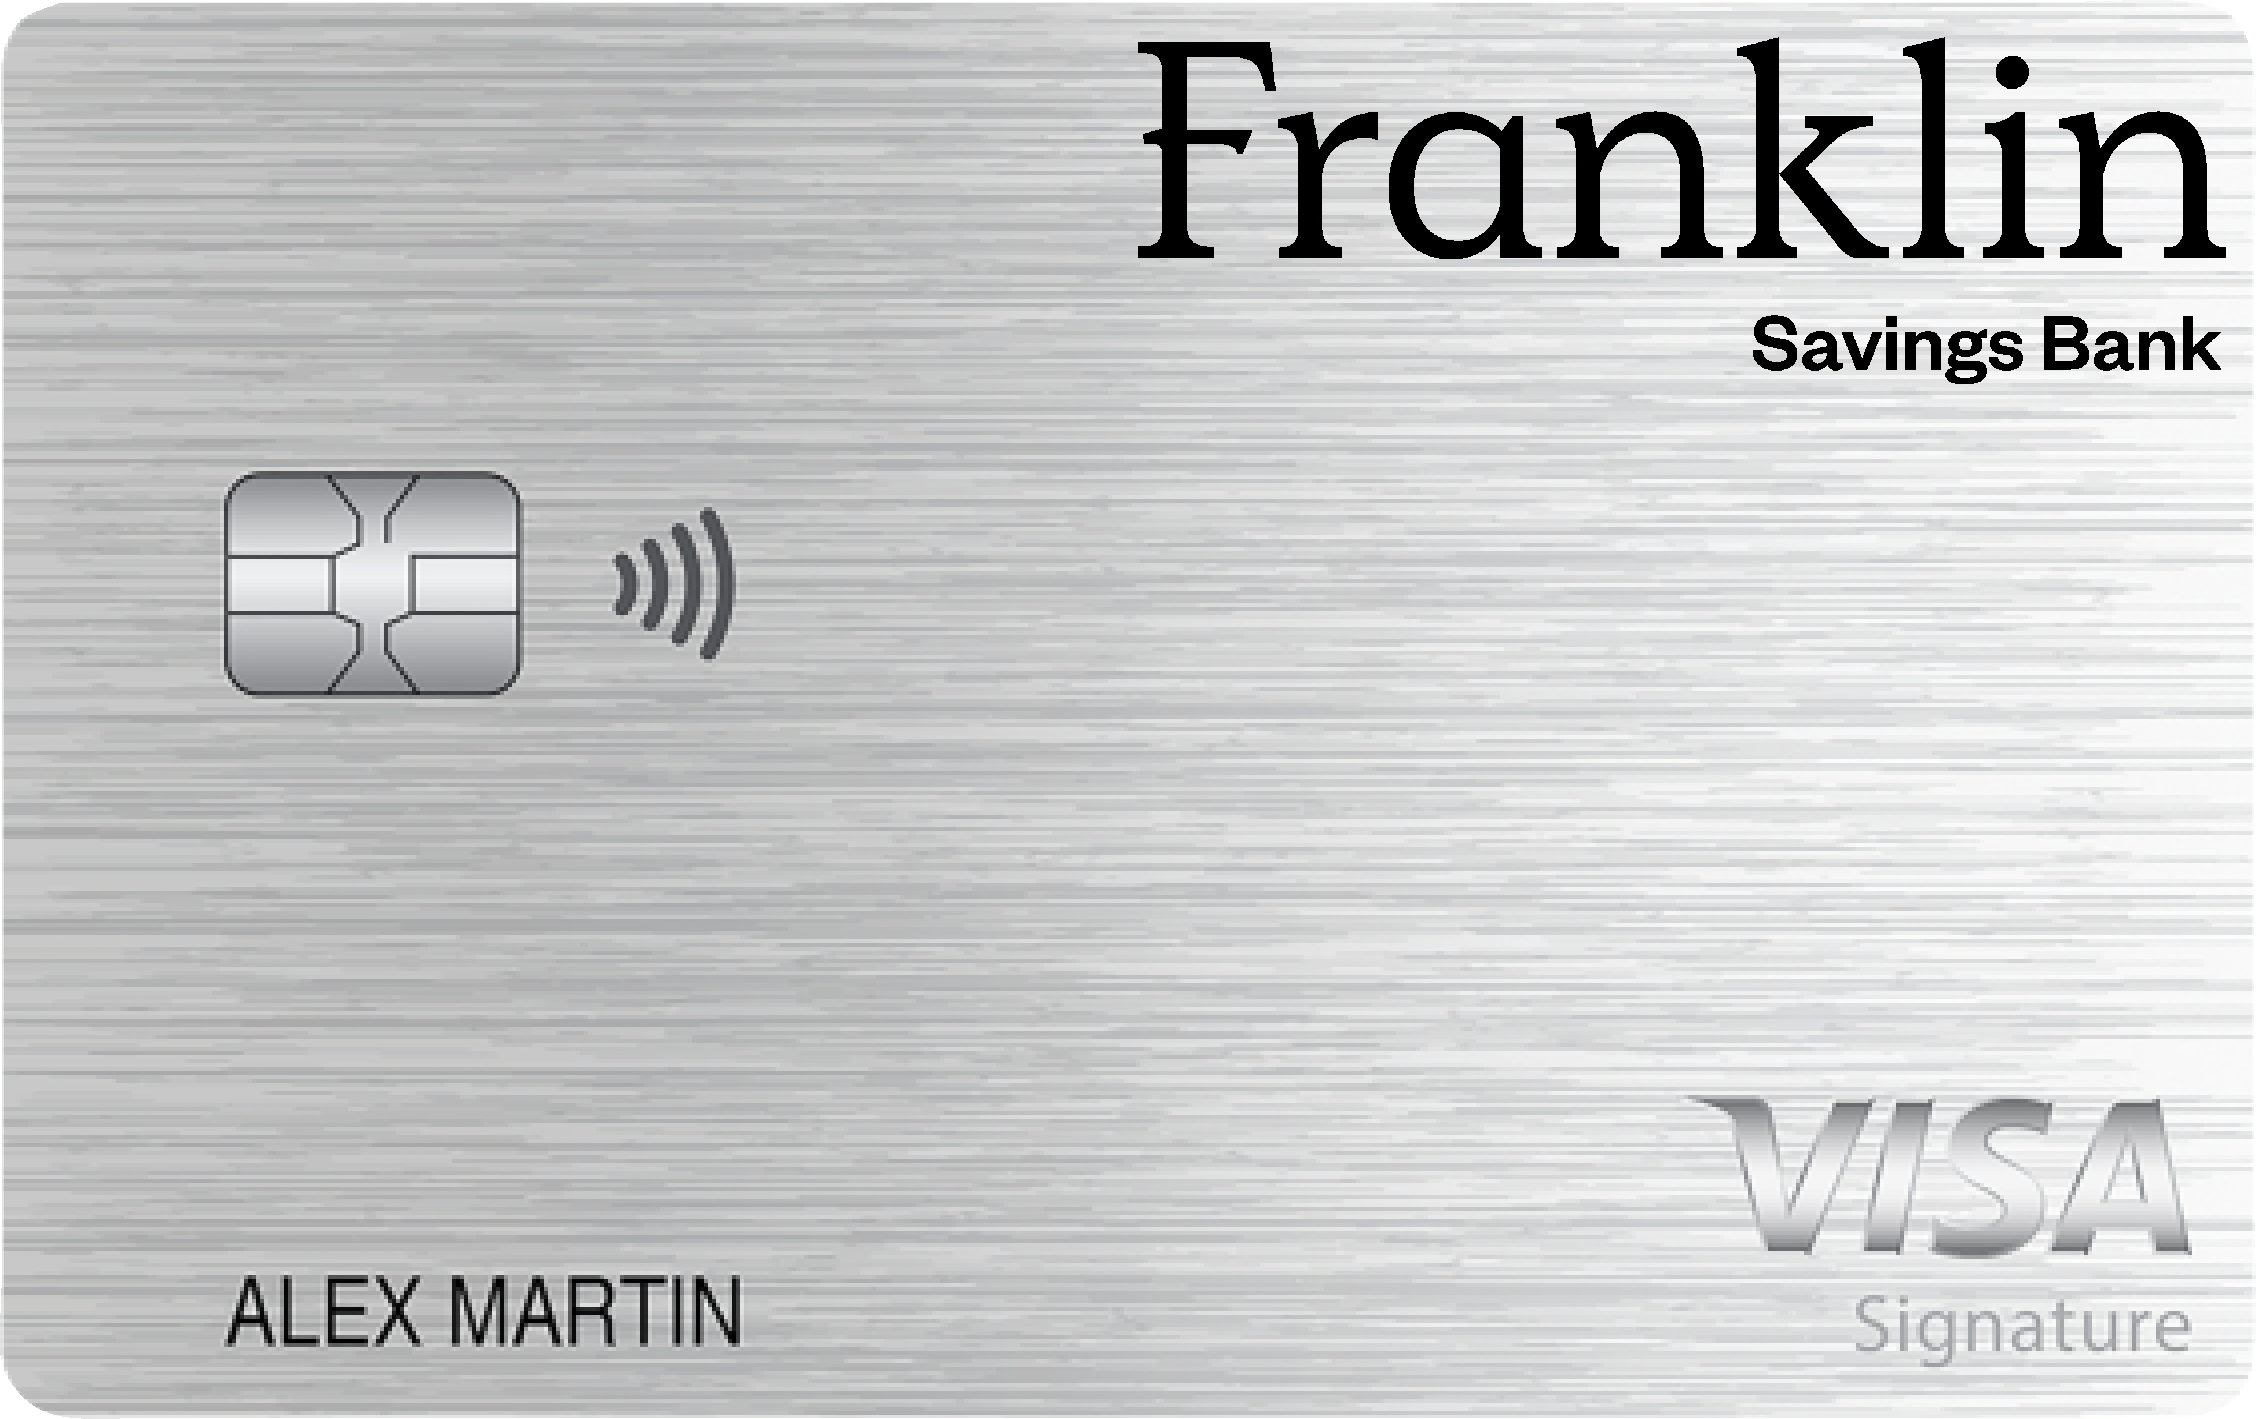 Franklin Savings Bank Max Cash Preferred Card